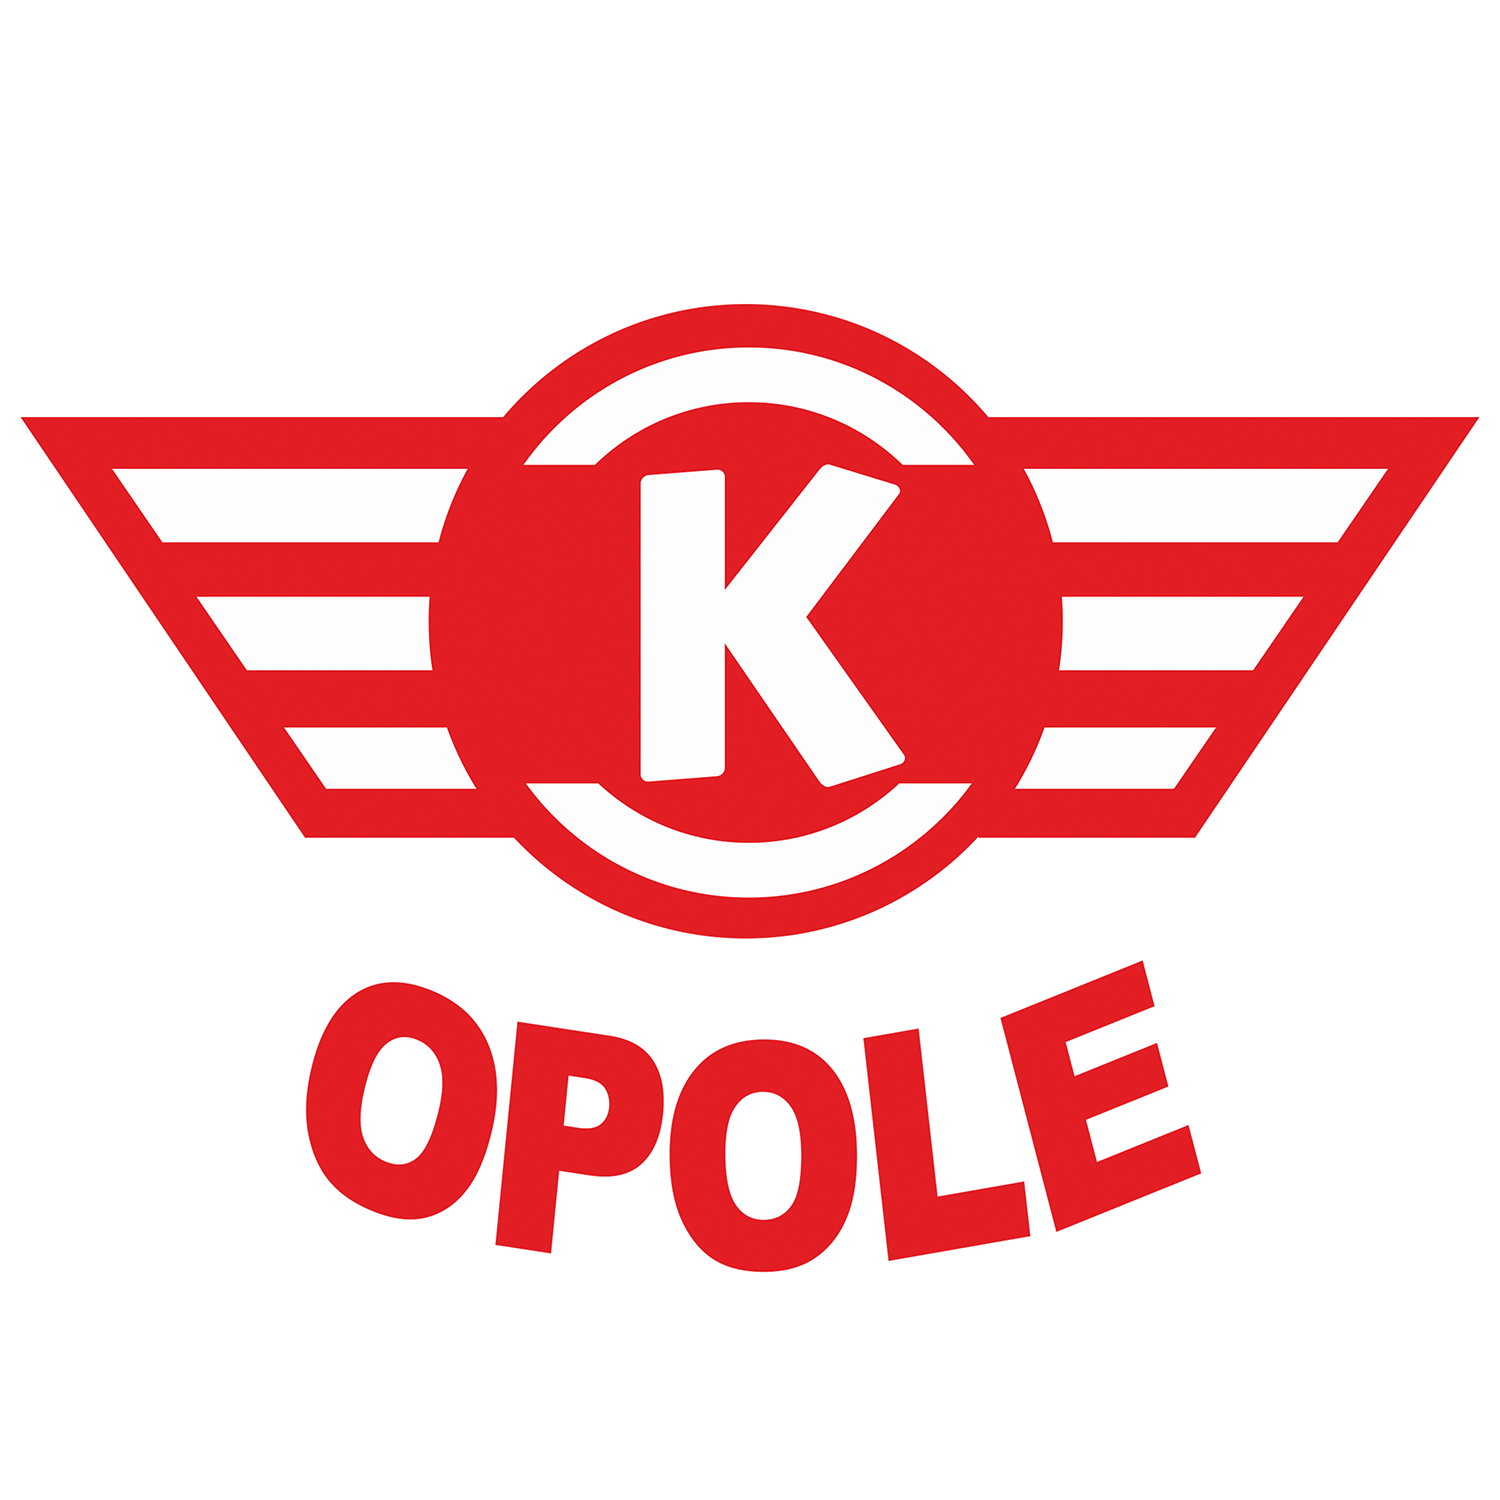 OK Bedmet Kolejarz Opole Logo